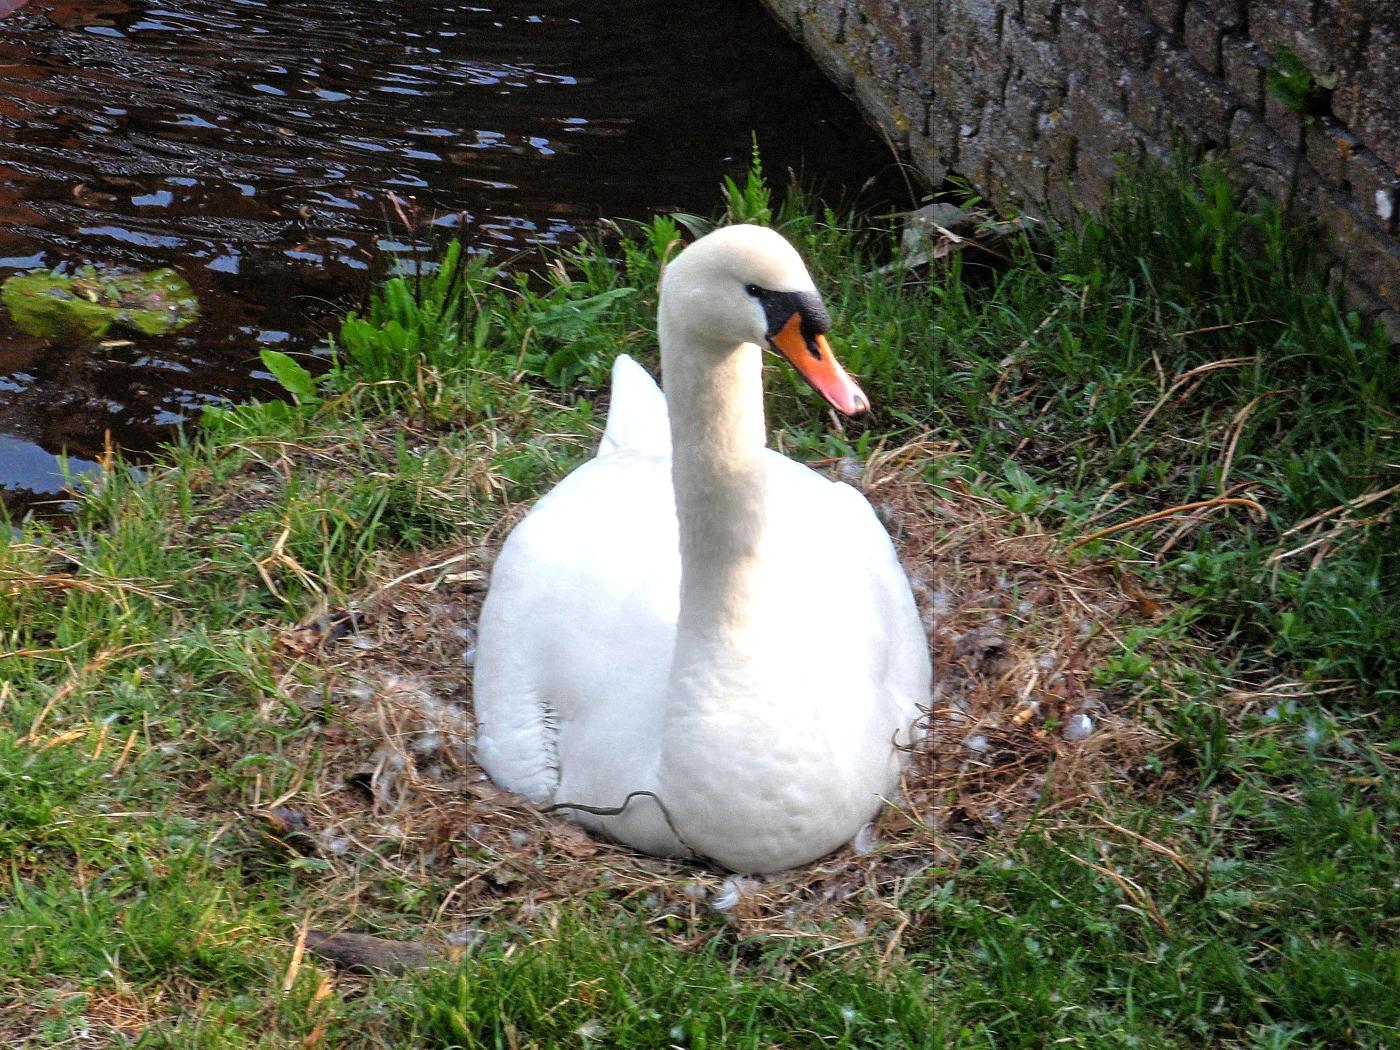 Swan's nest